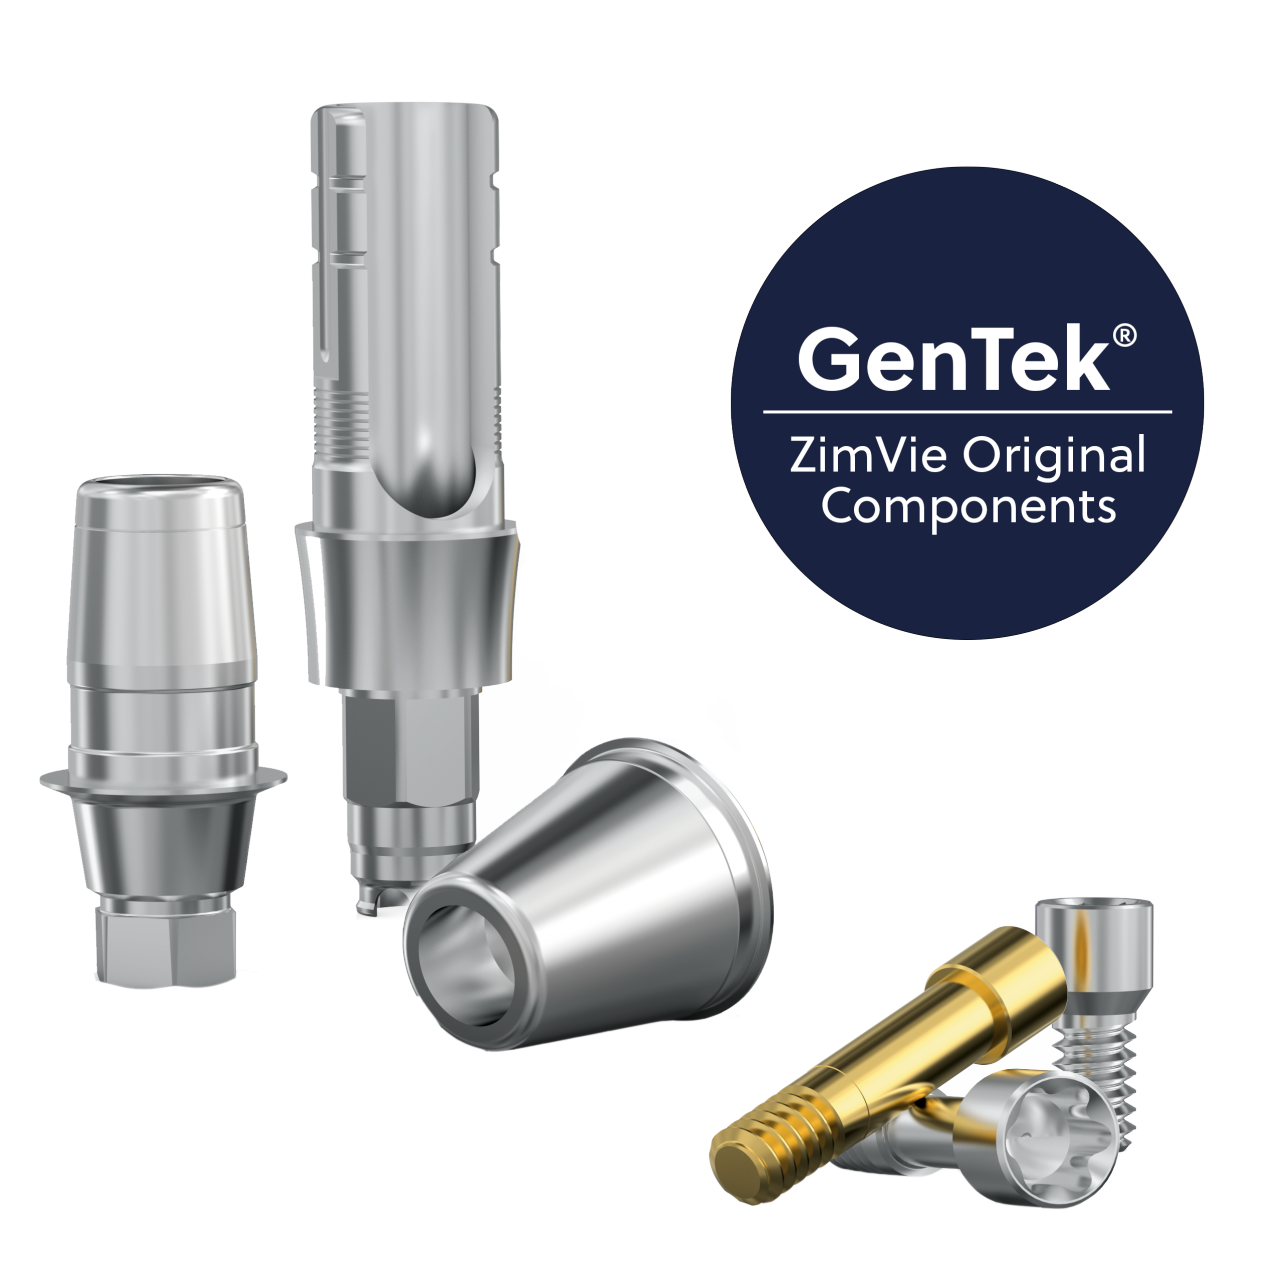 <h1>GenTek® Genuine Restorative Components</h1>